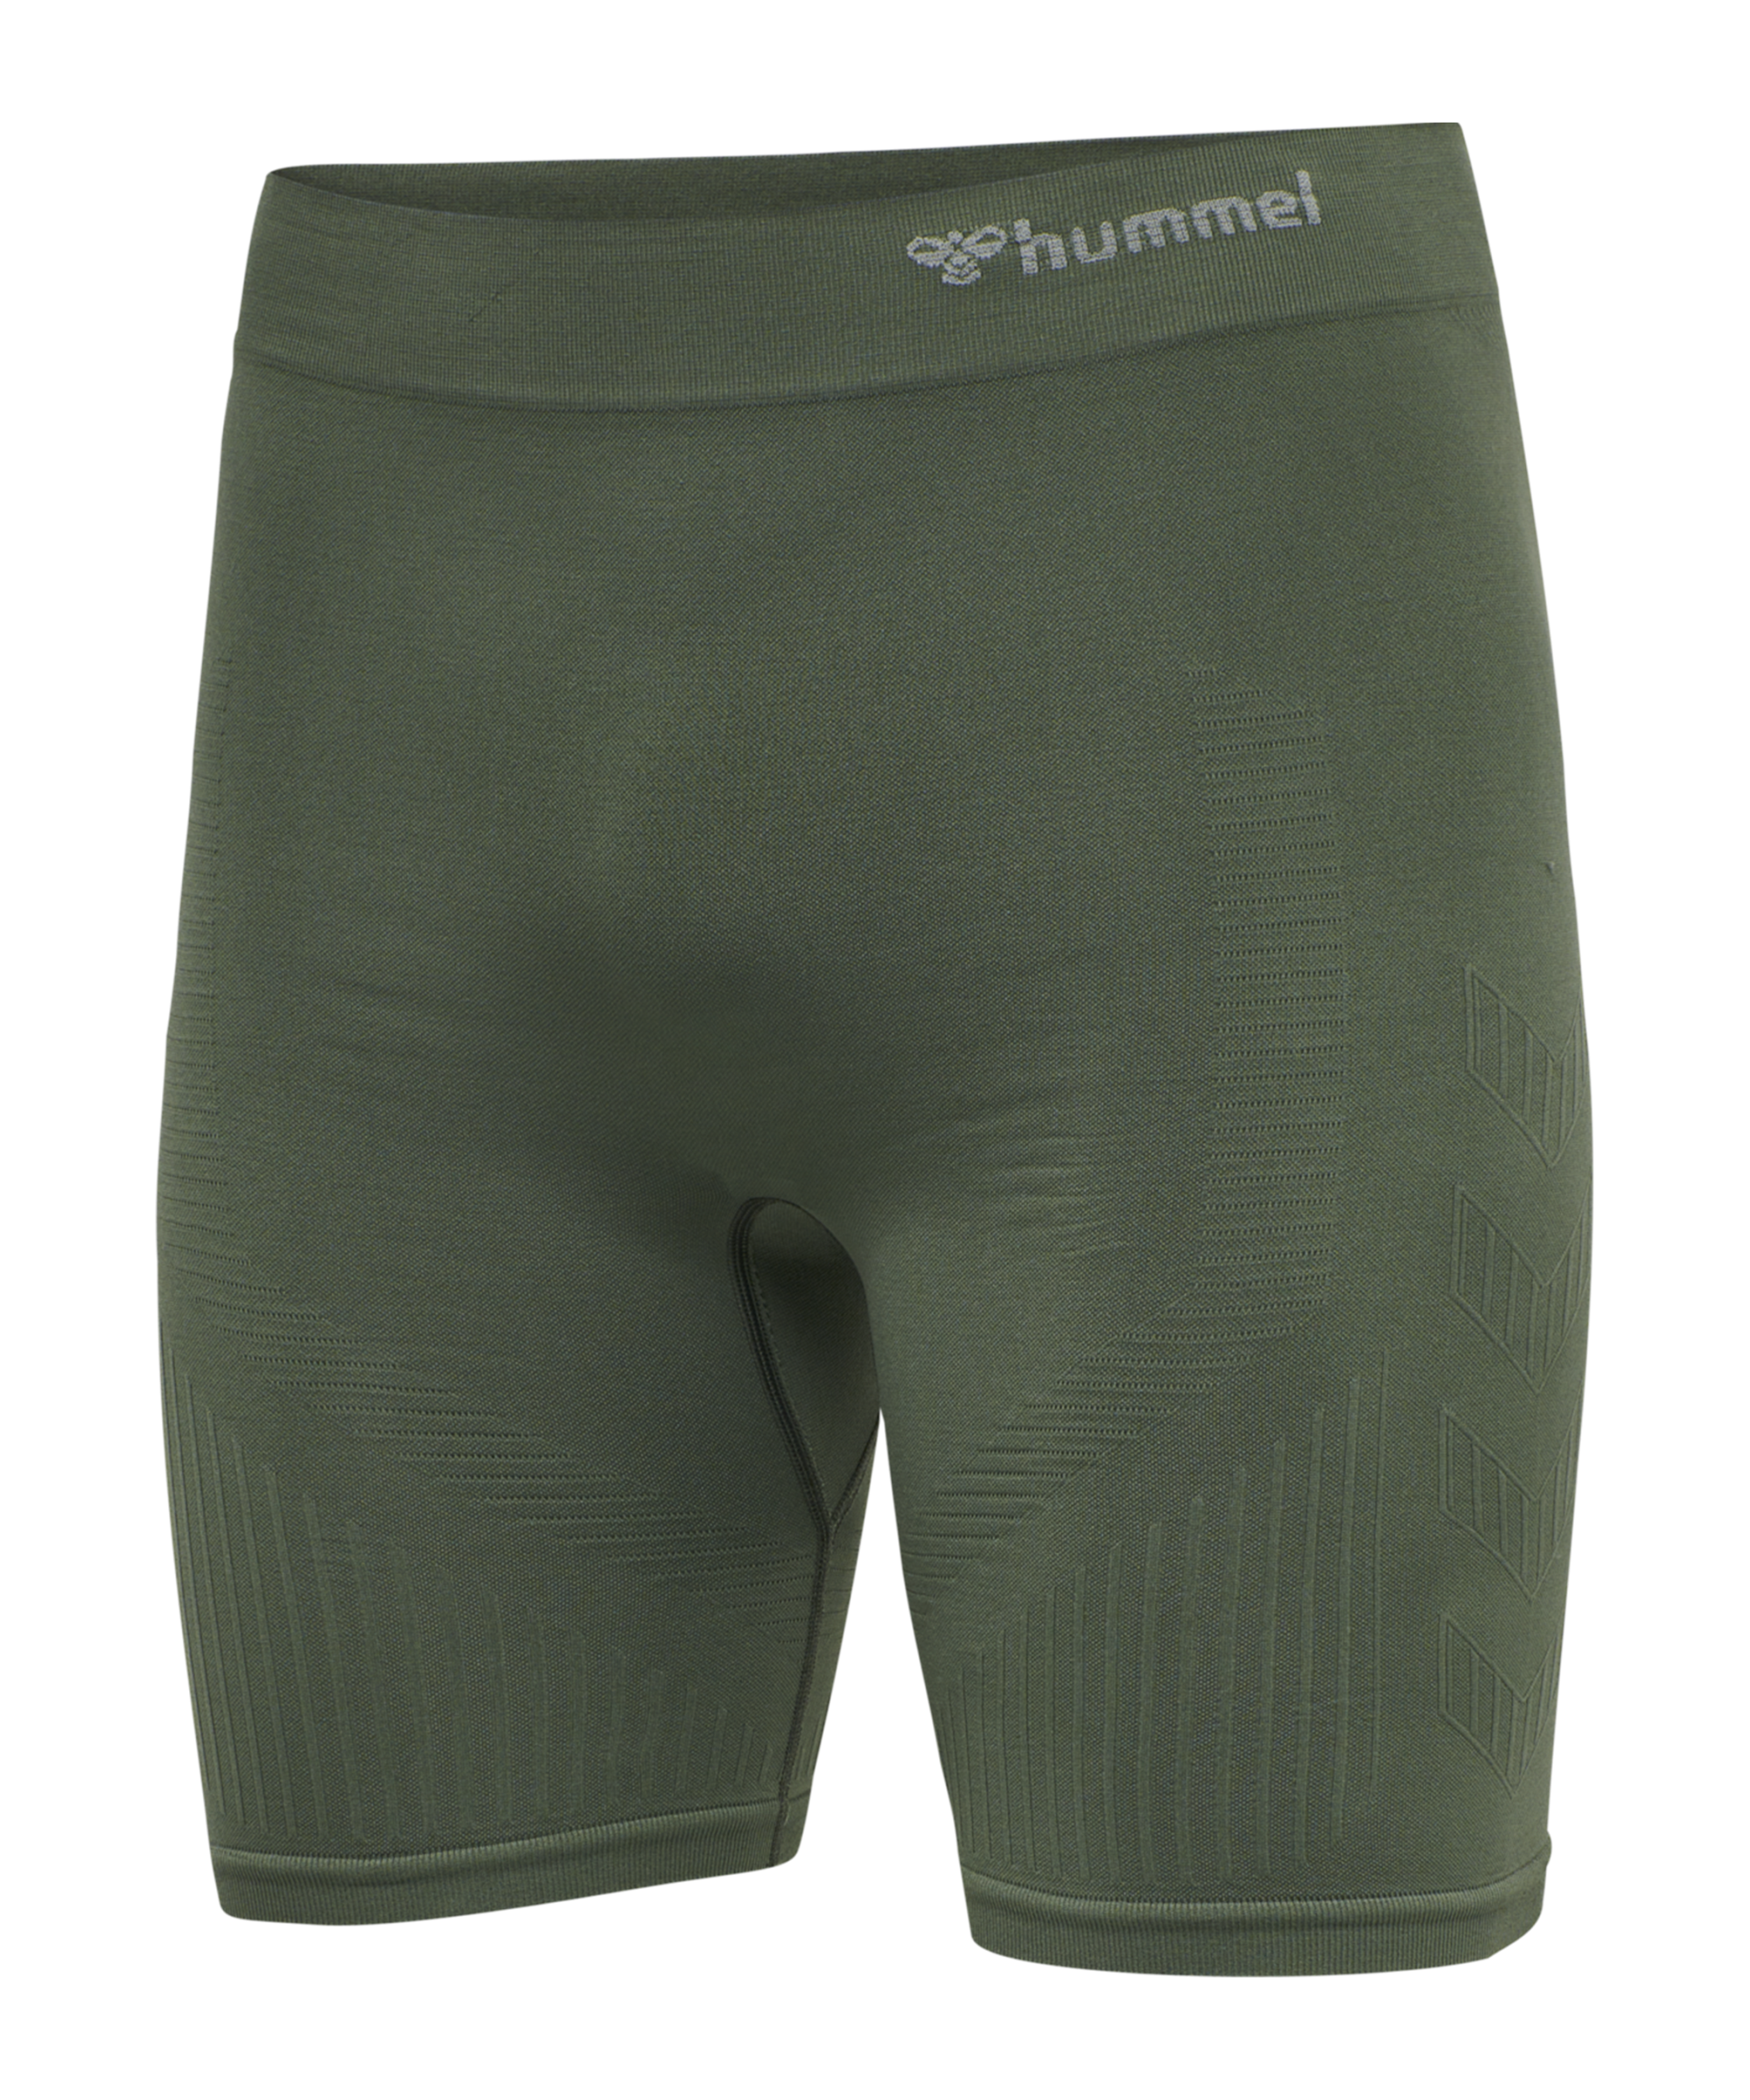 Shorts Hummel hmlstroke Seamless Tight